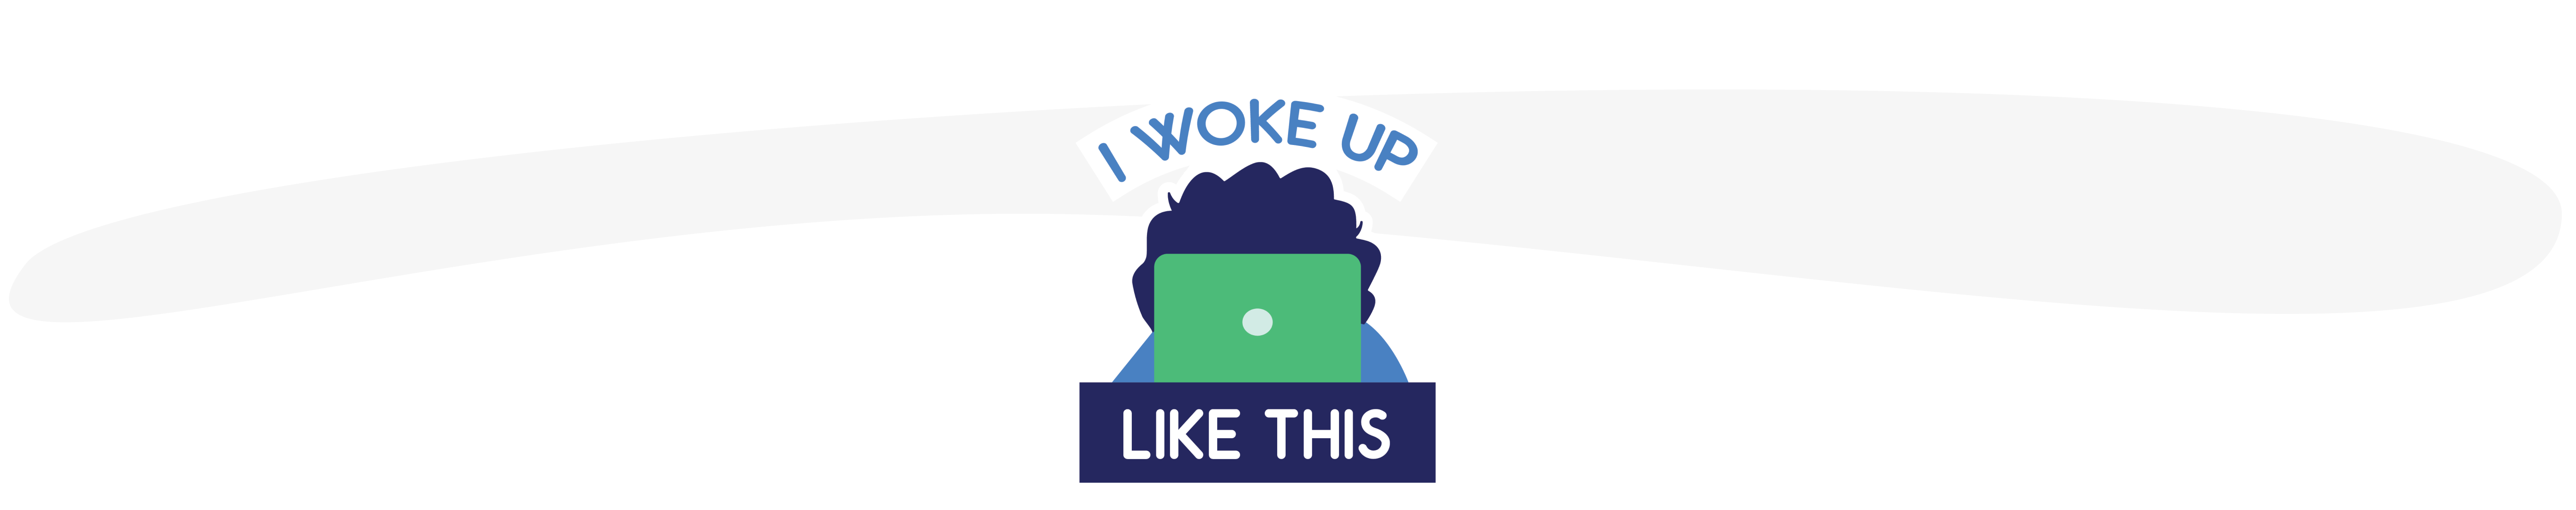 Divider illustration - "I woke up like this"